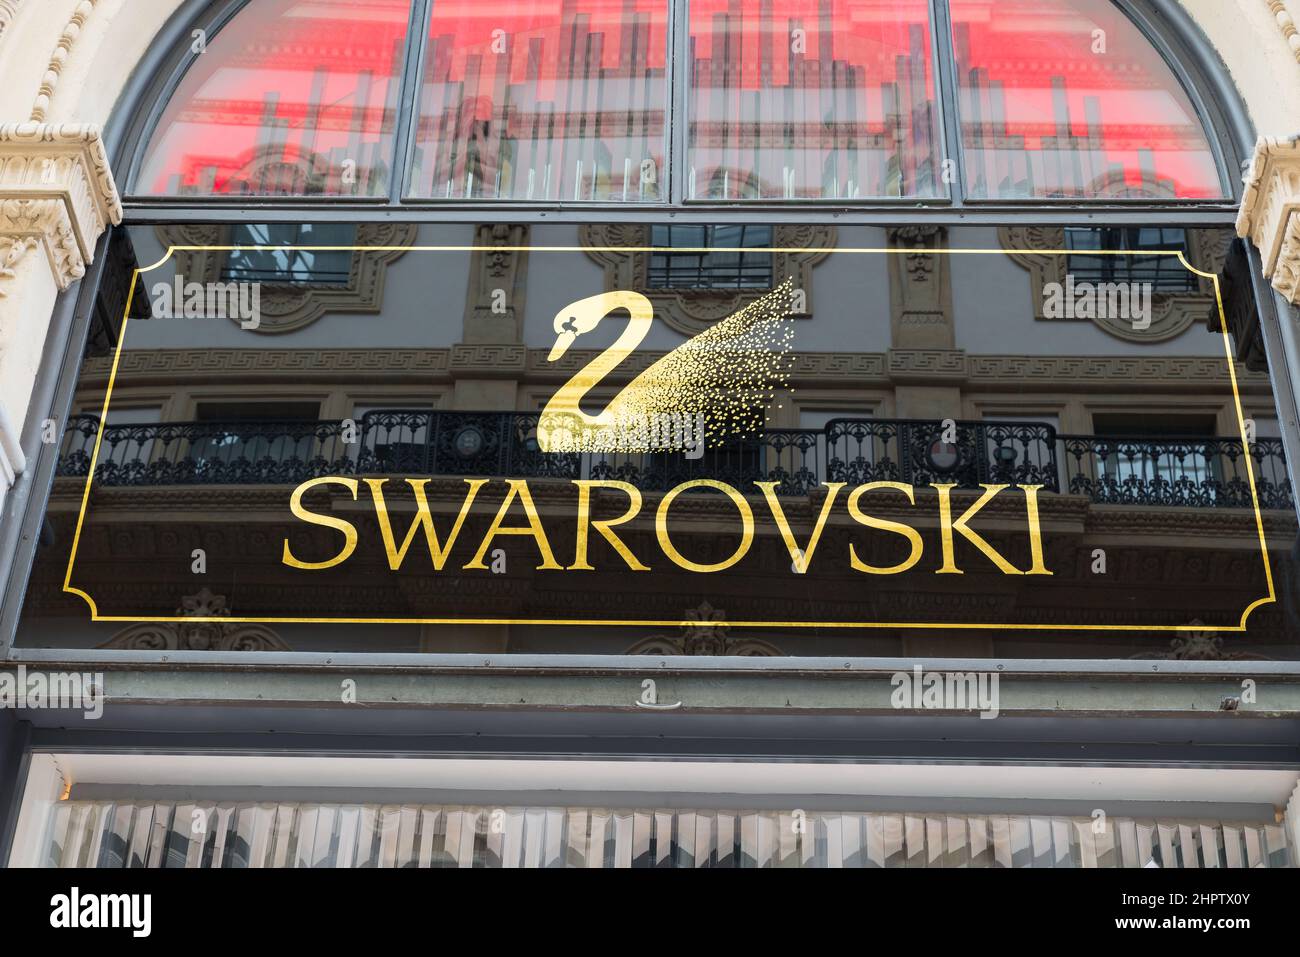 Swarovski sign at the entrance of a shop Stock Photo